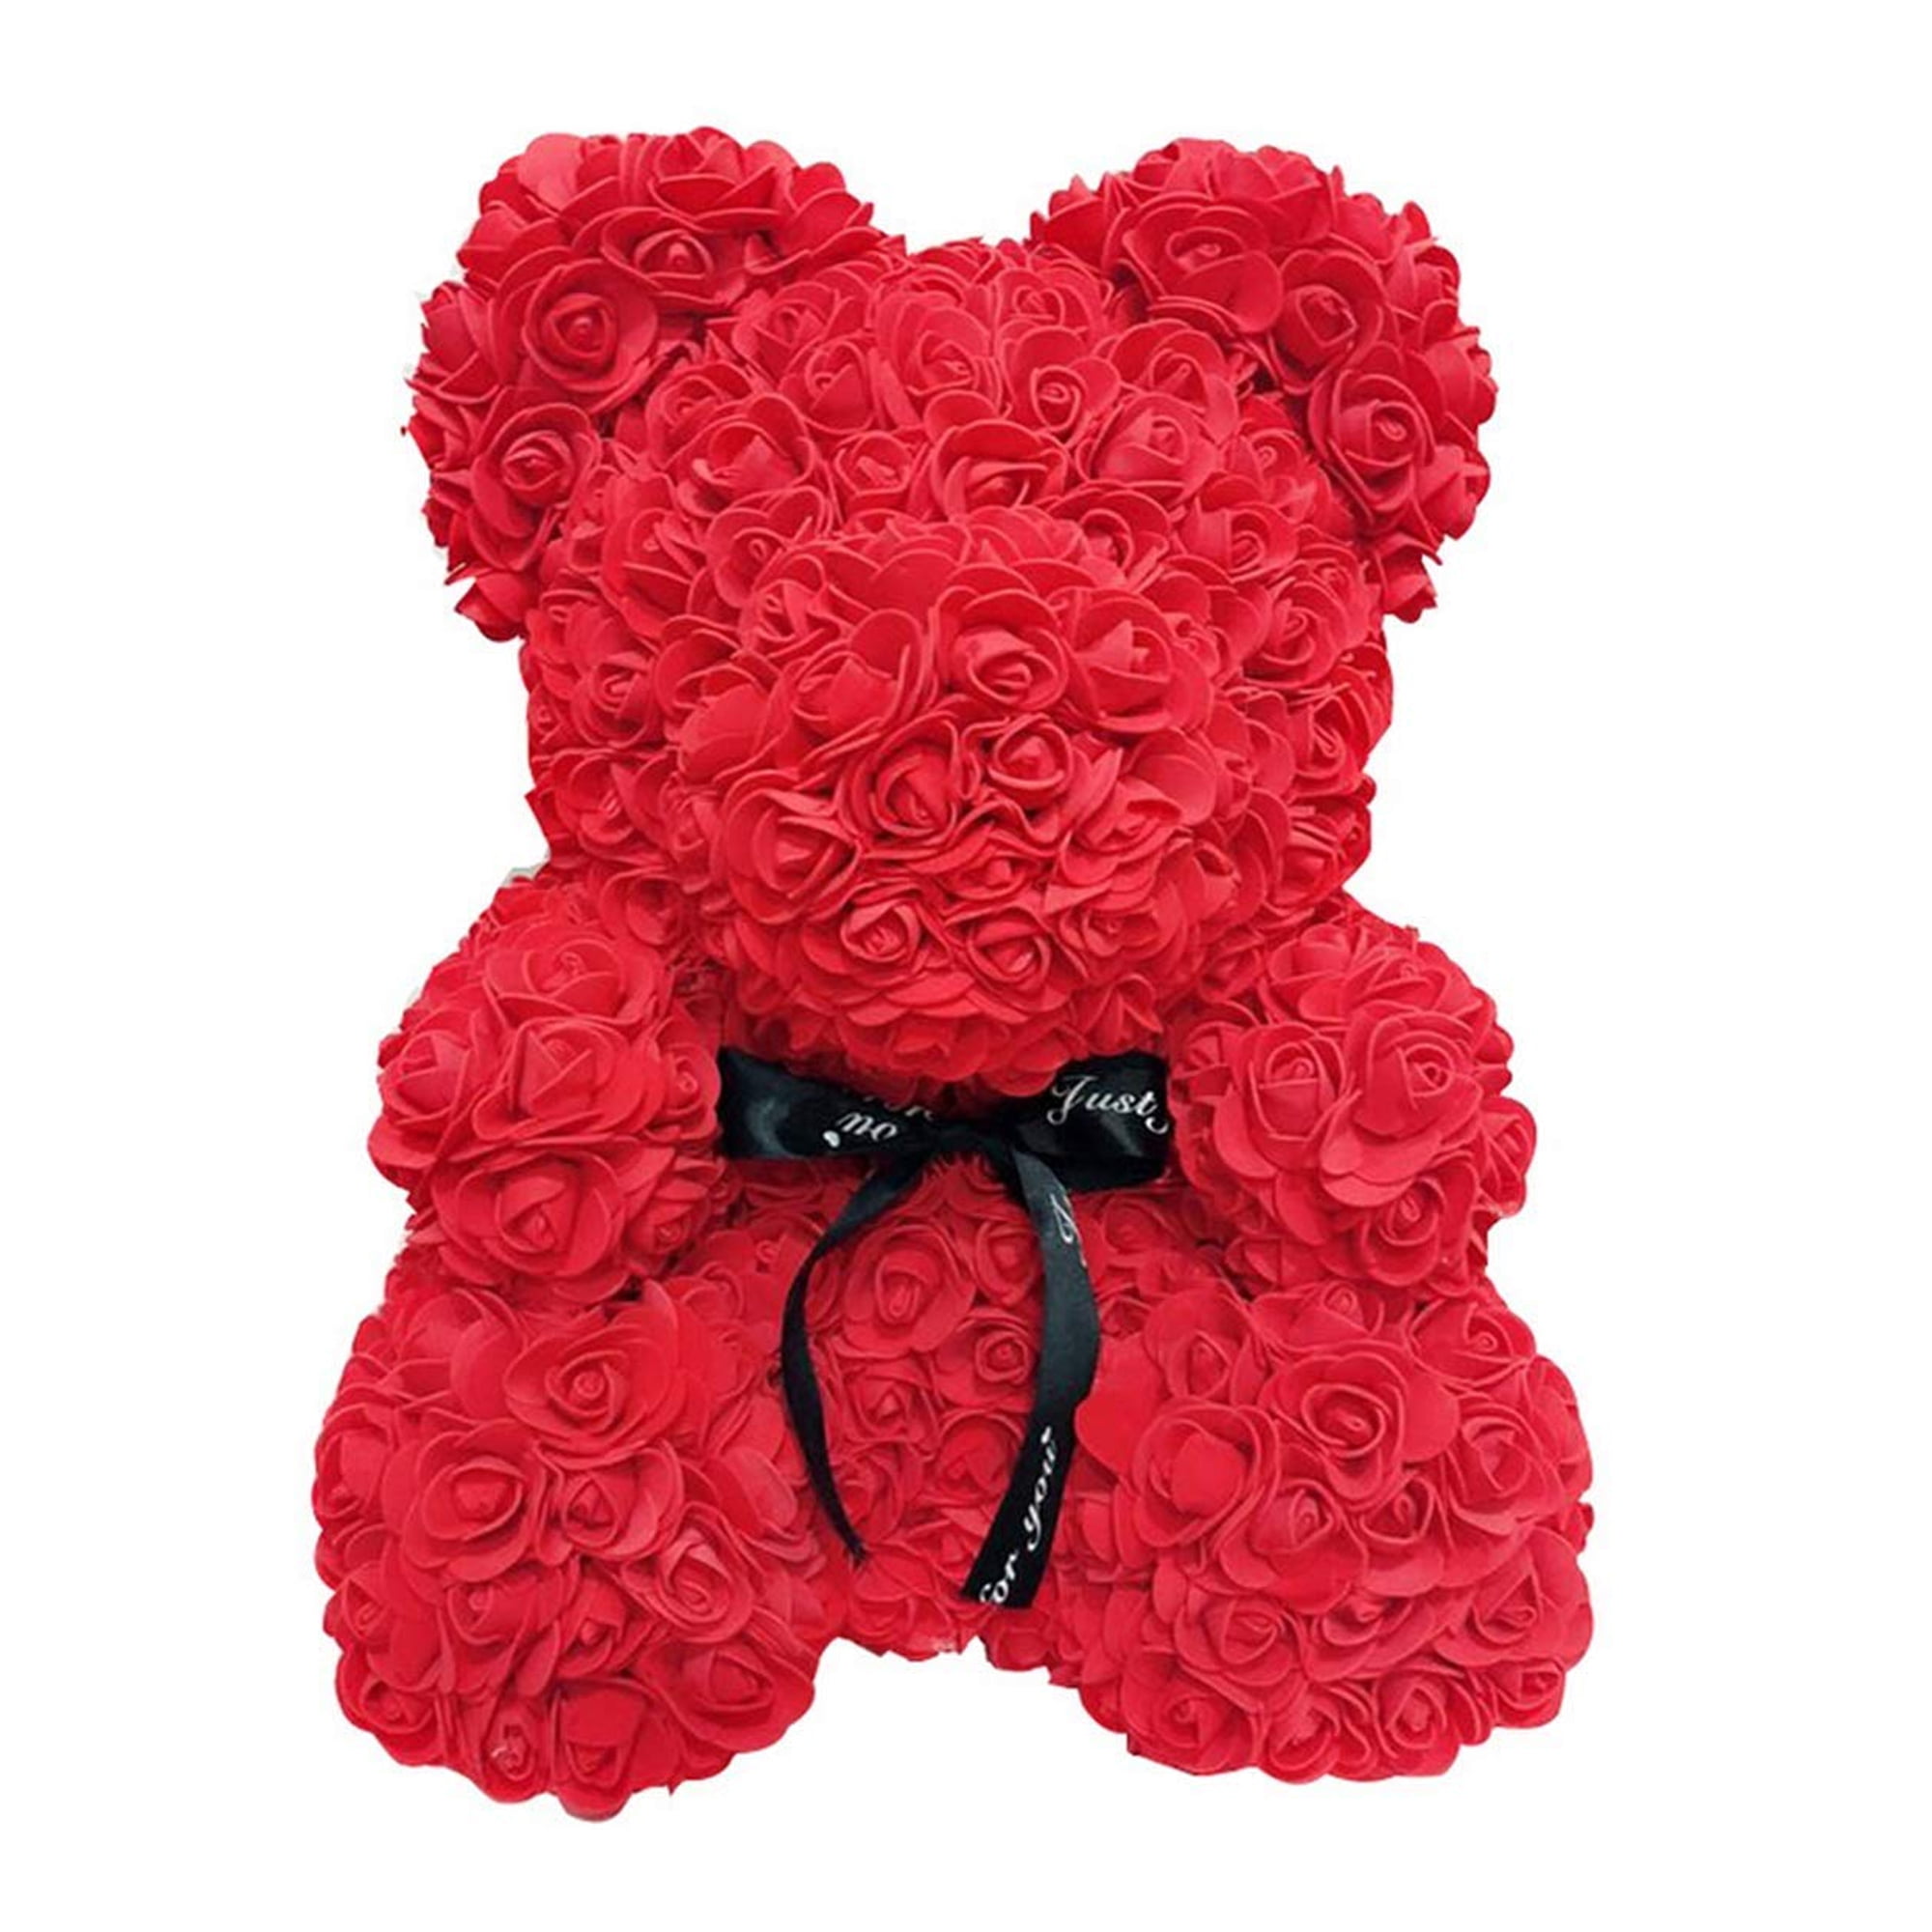 Bear Lovely Pink Rose Flower Bear Toys Birthday Wedding Valentine'S Gifts*38cm 